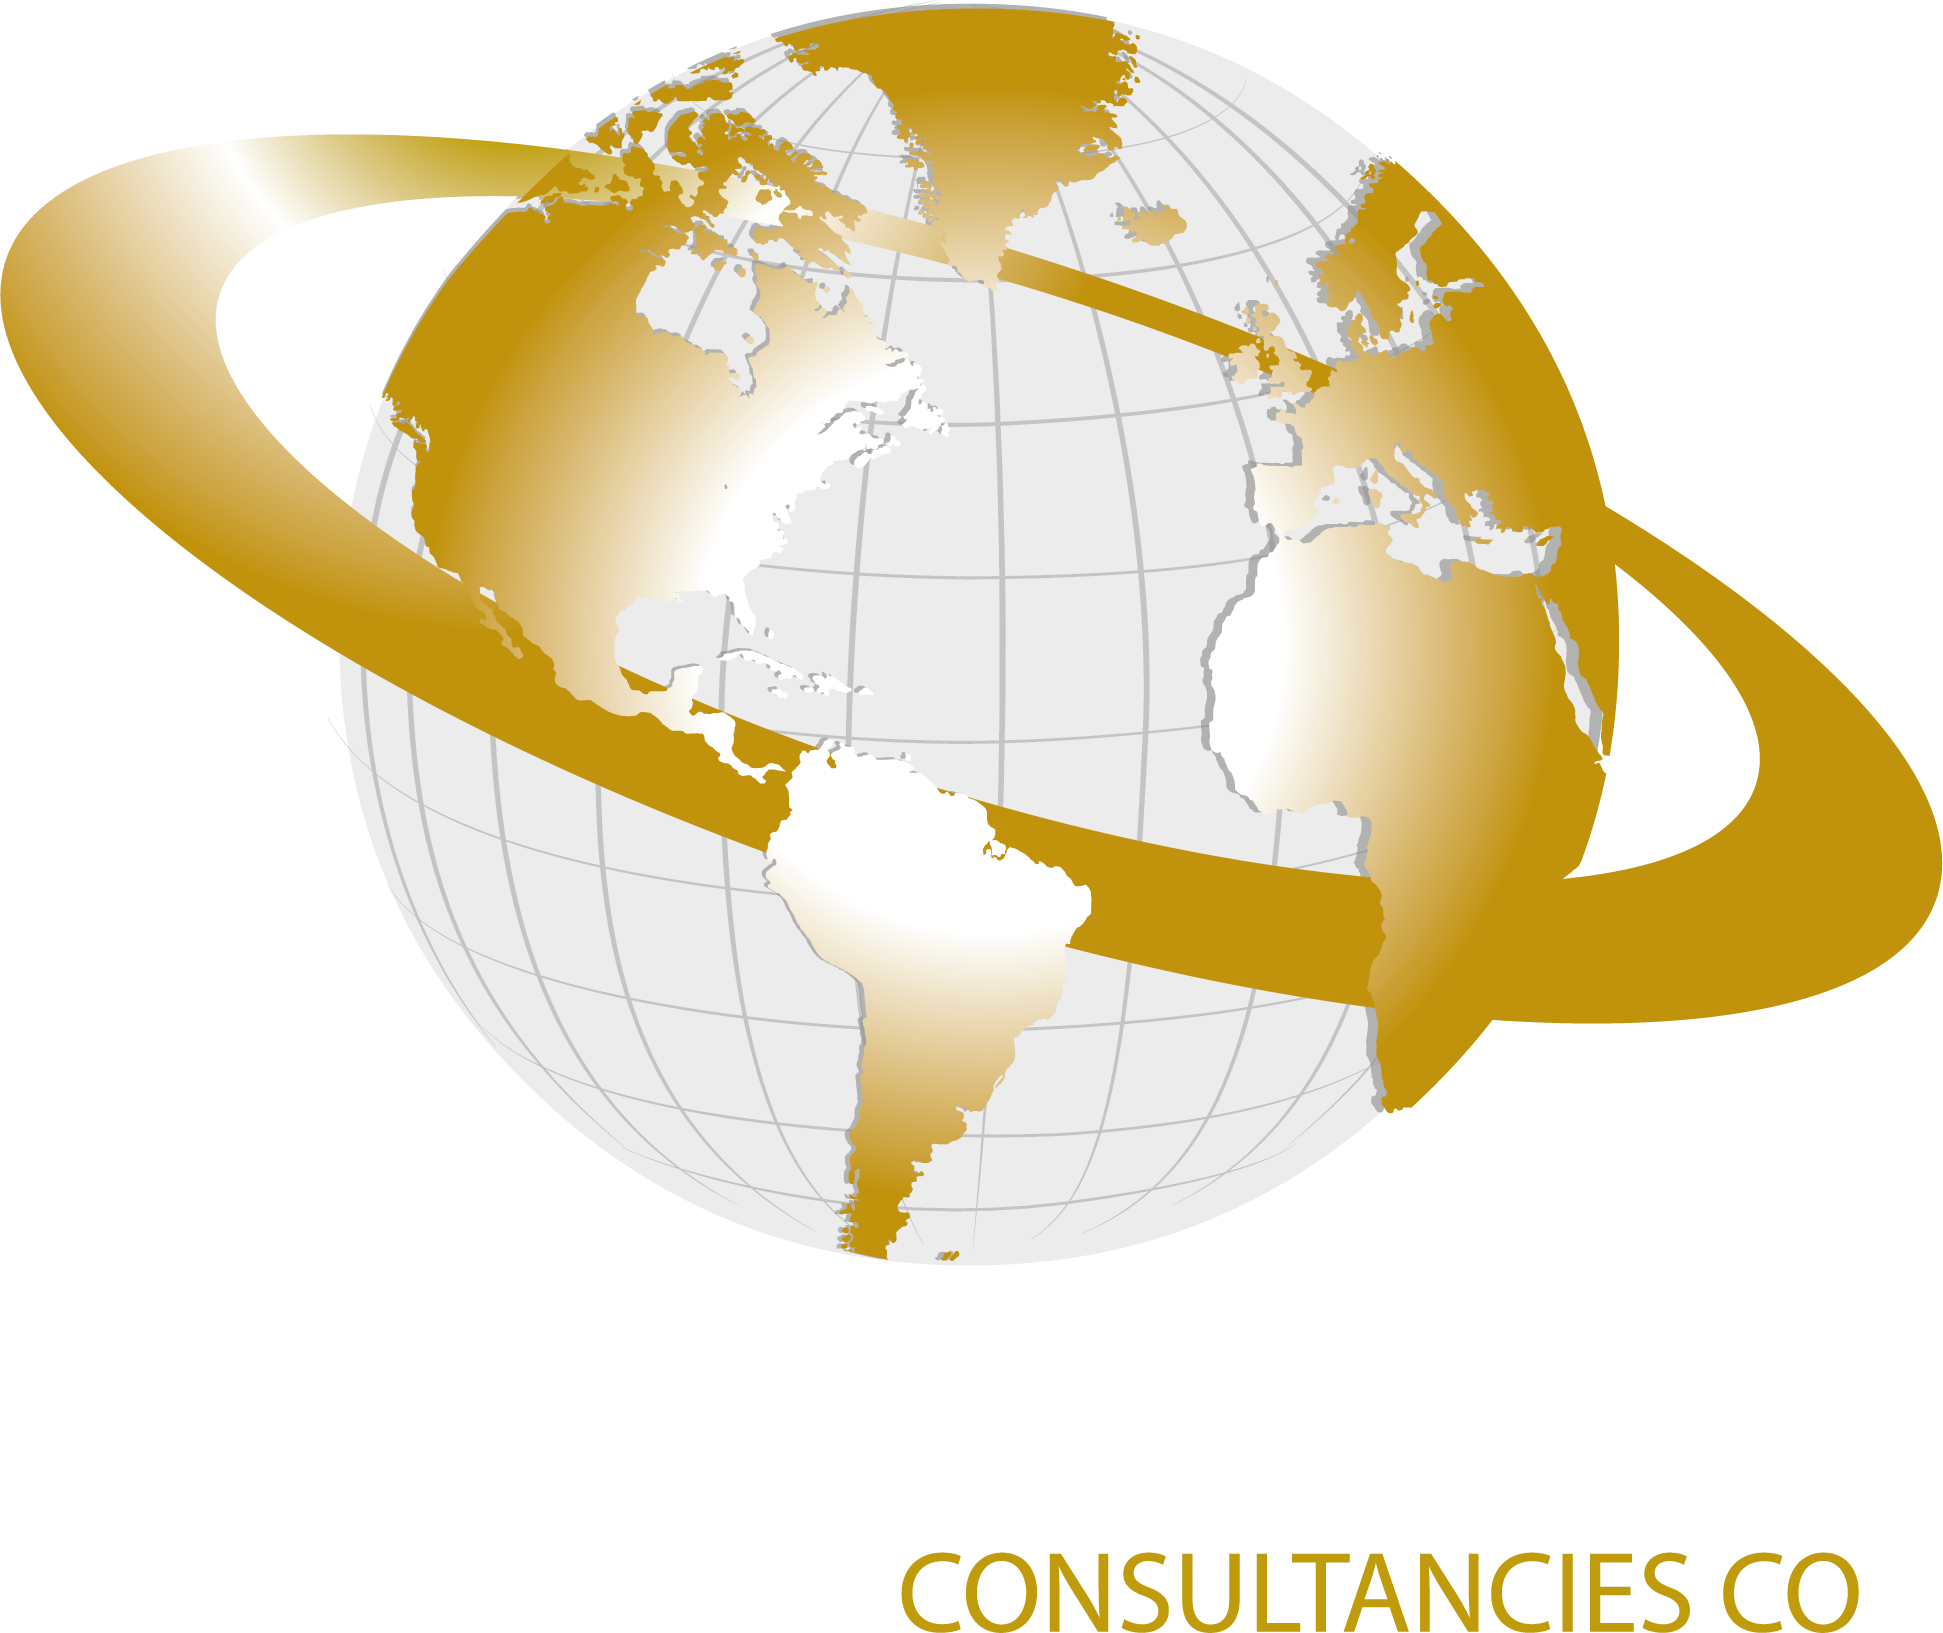 Euro Alliance Management